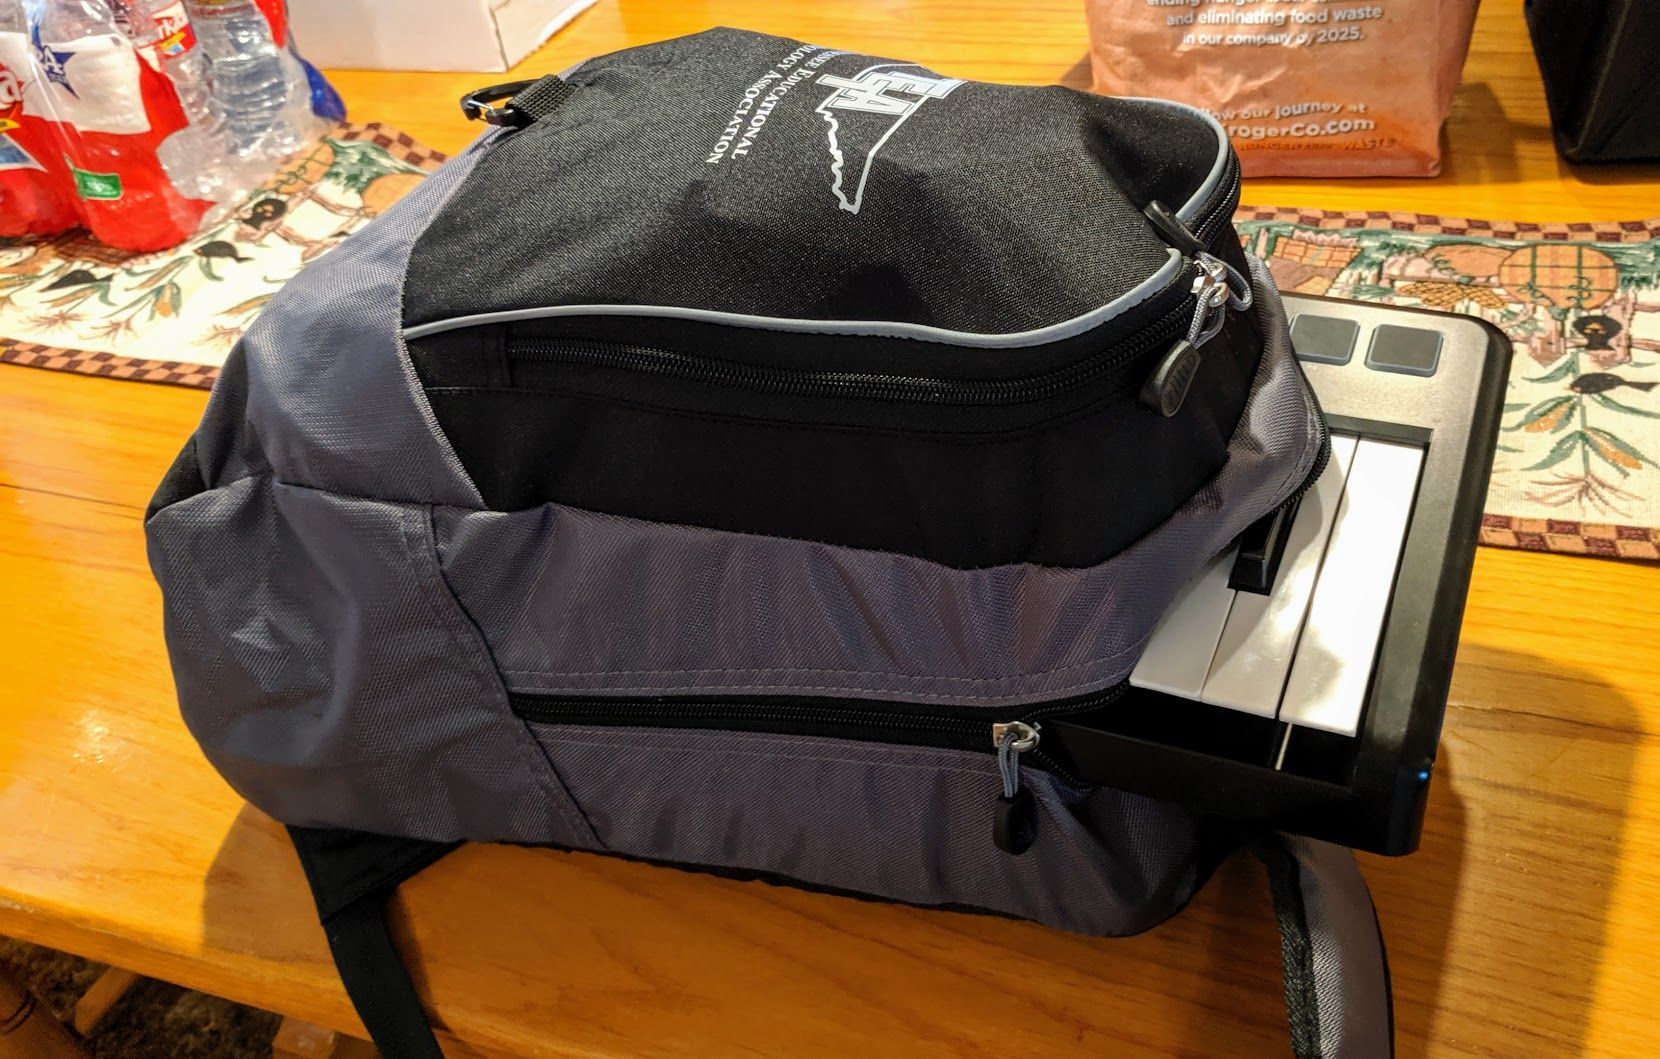 Studio-in-a-backpack